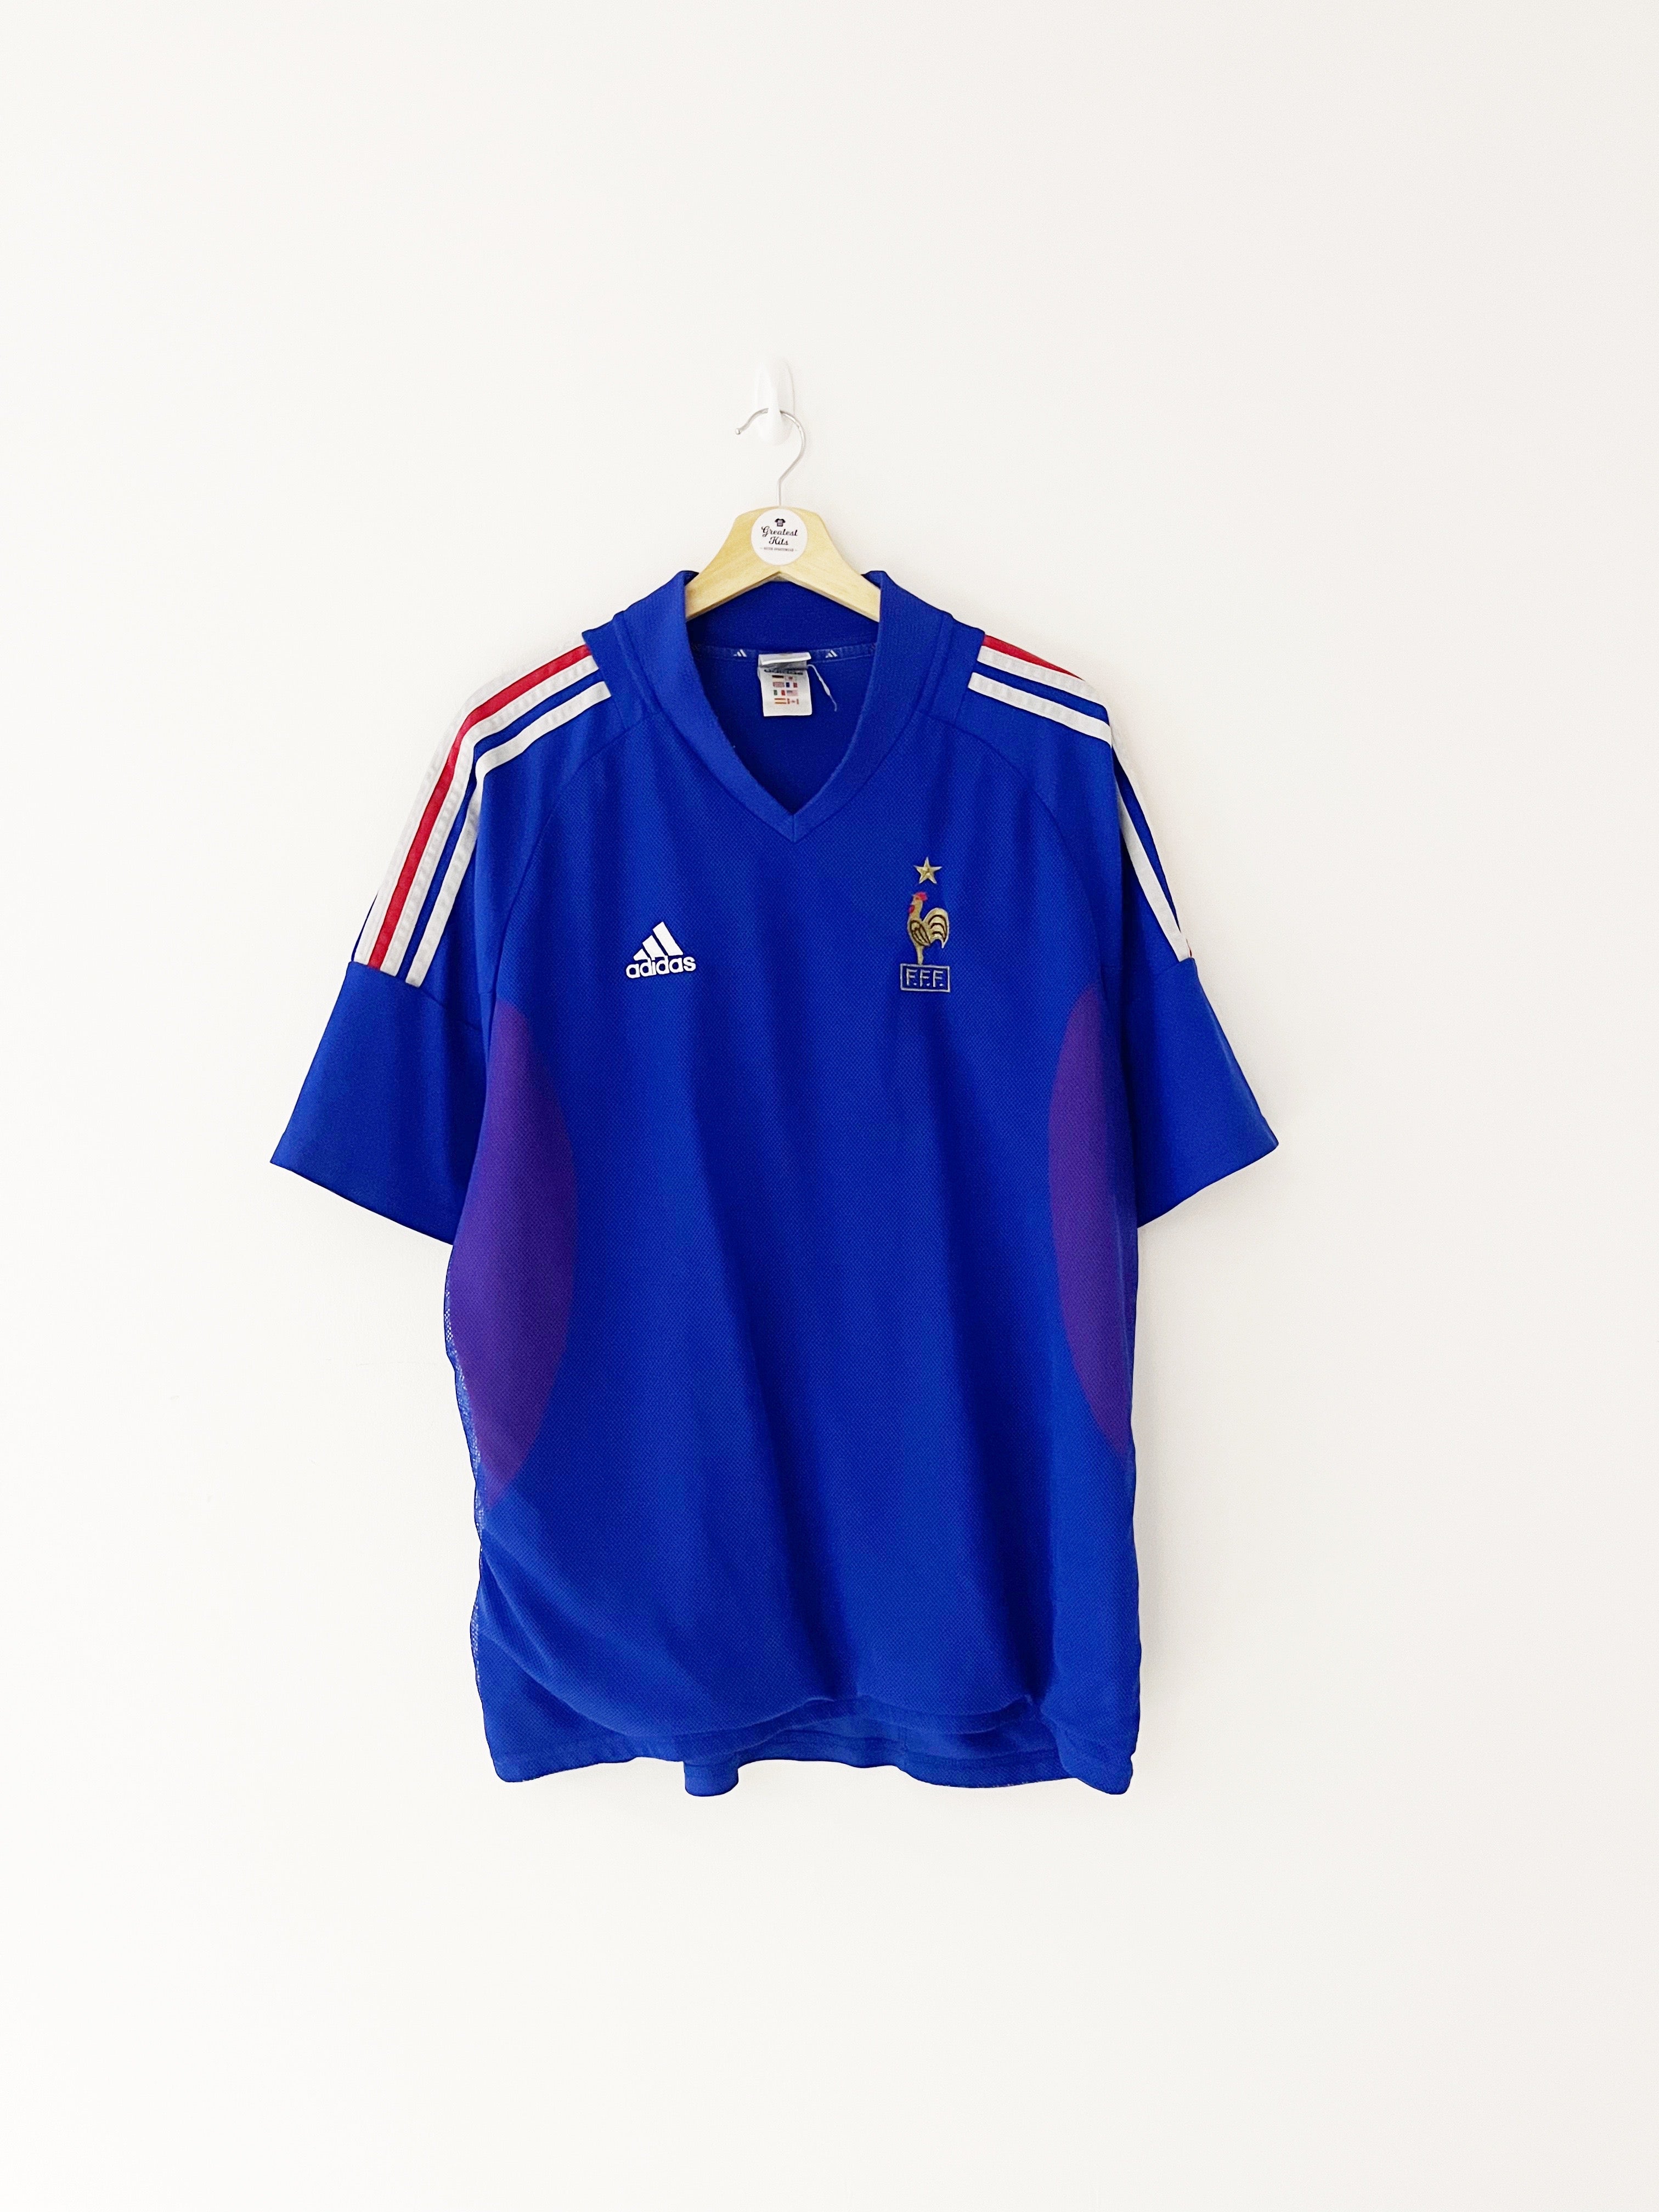 2002/04 France Home Shirt (XL) 9/10